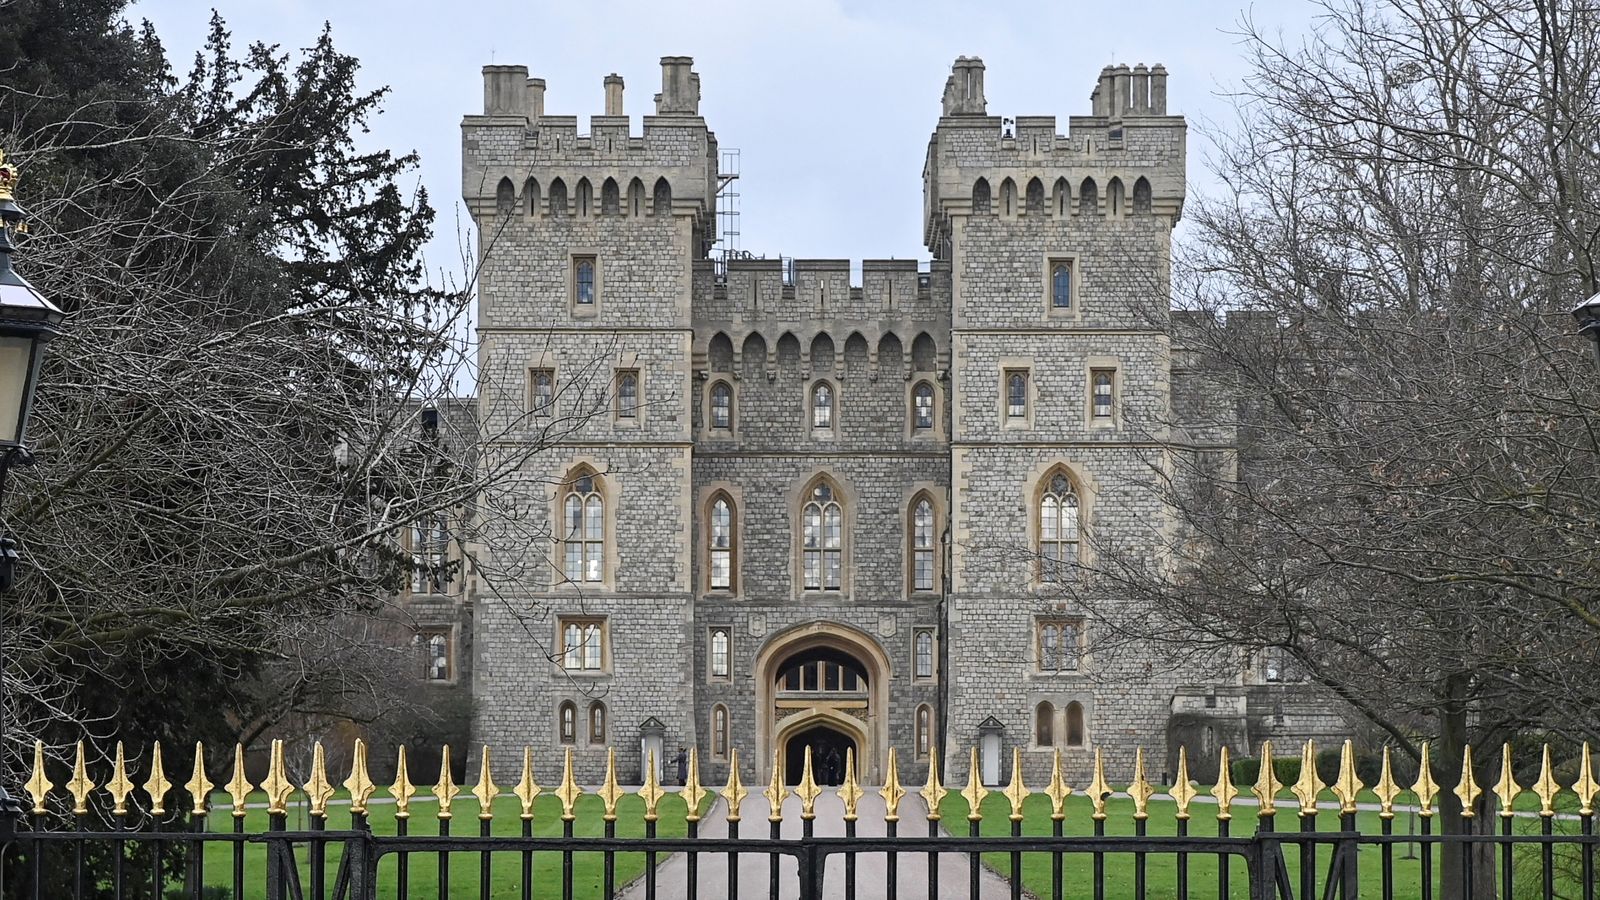 Coronation Concert Starstudded Lineup Announced For Windsor Castle